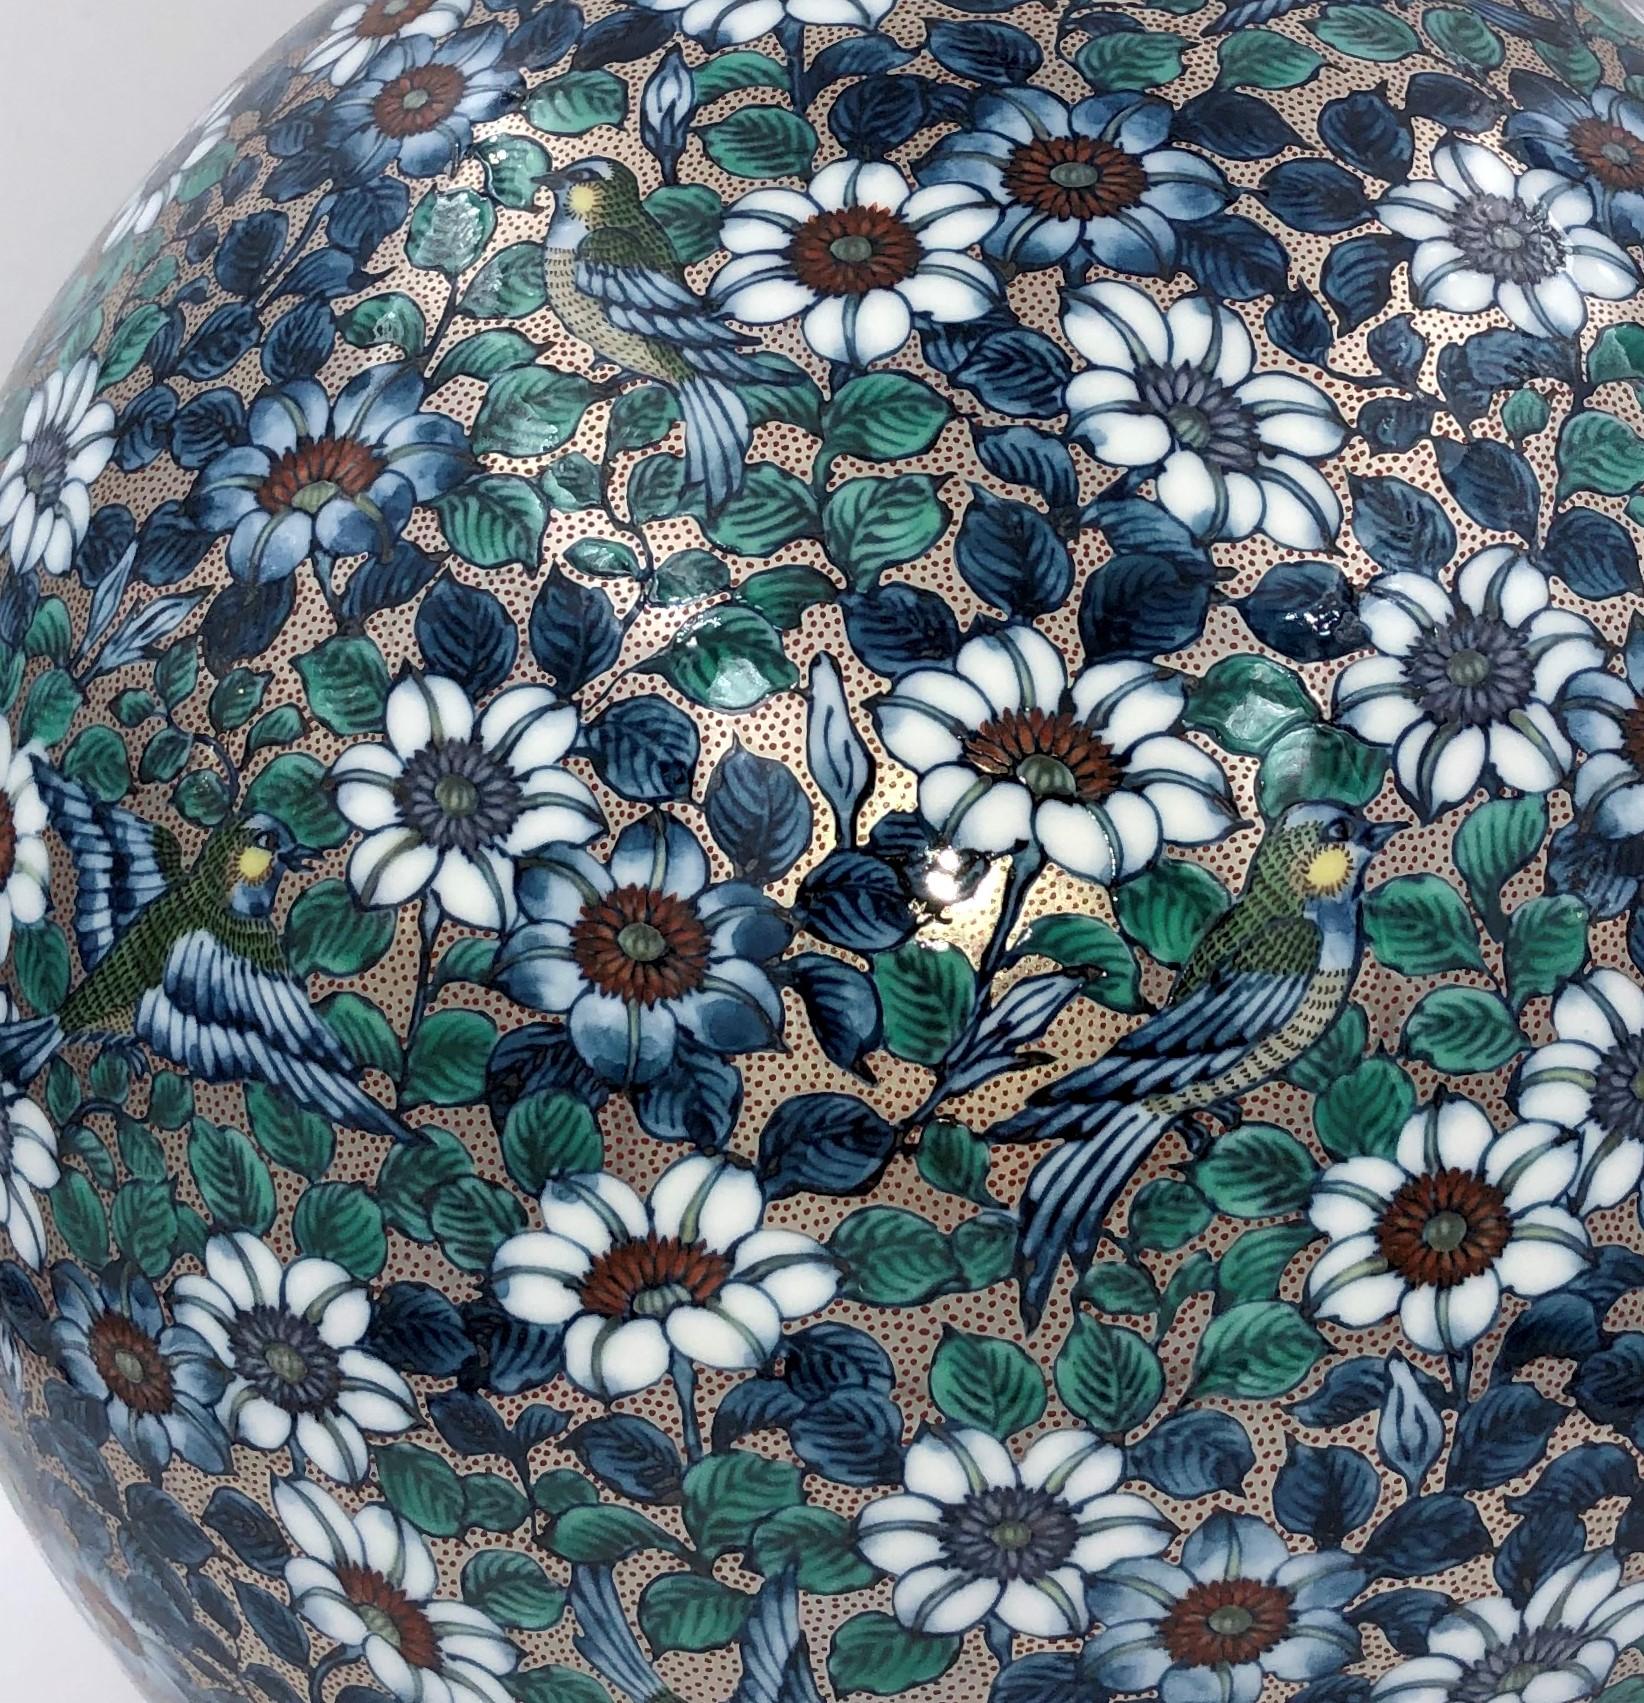 Gilt Japanese Green White Blue Porcelain Vase by Contemporary Master Artist Duo